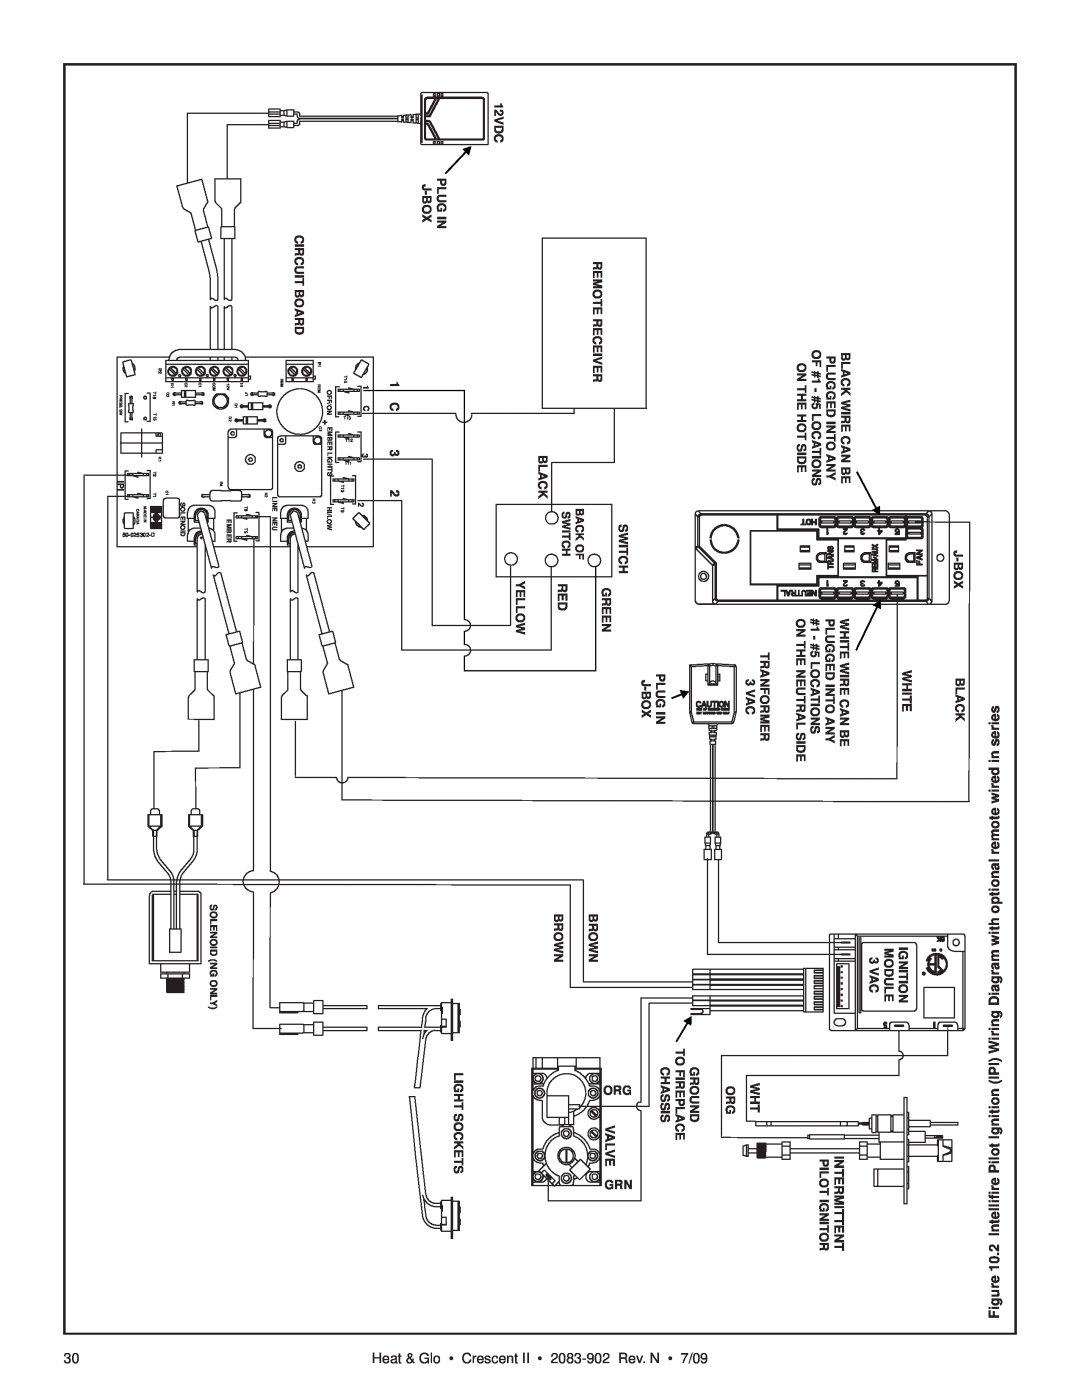 Heat & Glo LifeStyle CRESCENT II owner manual Heat & Glo Crescent II 2083-902Rev. N 7/09, White, Intermittent, Valve 